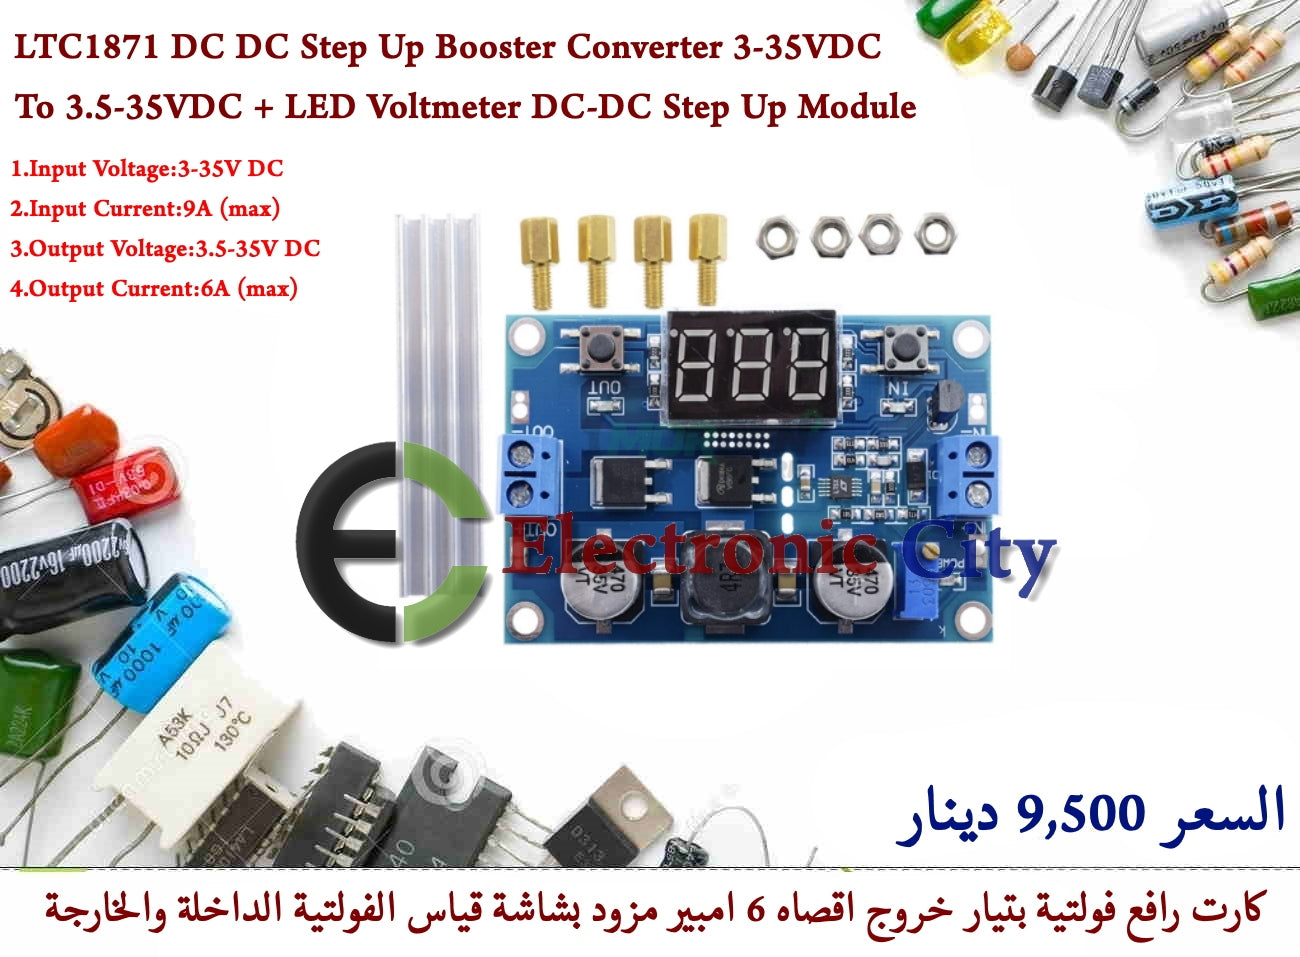 LTC1871 DC DC Step Up Booster Converter 3-35VDC to 3.5-35VDC + LED Vol –  Electronic City المدينة الالكترونية